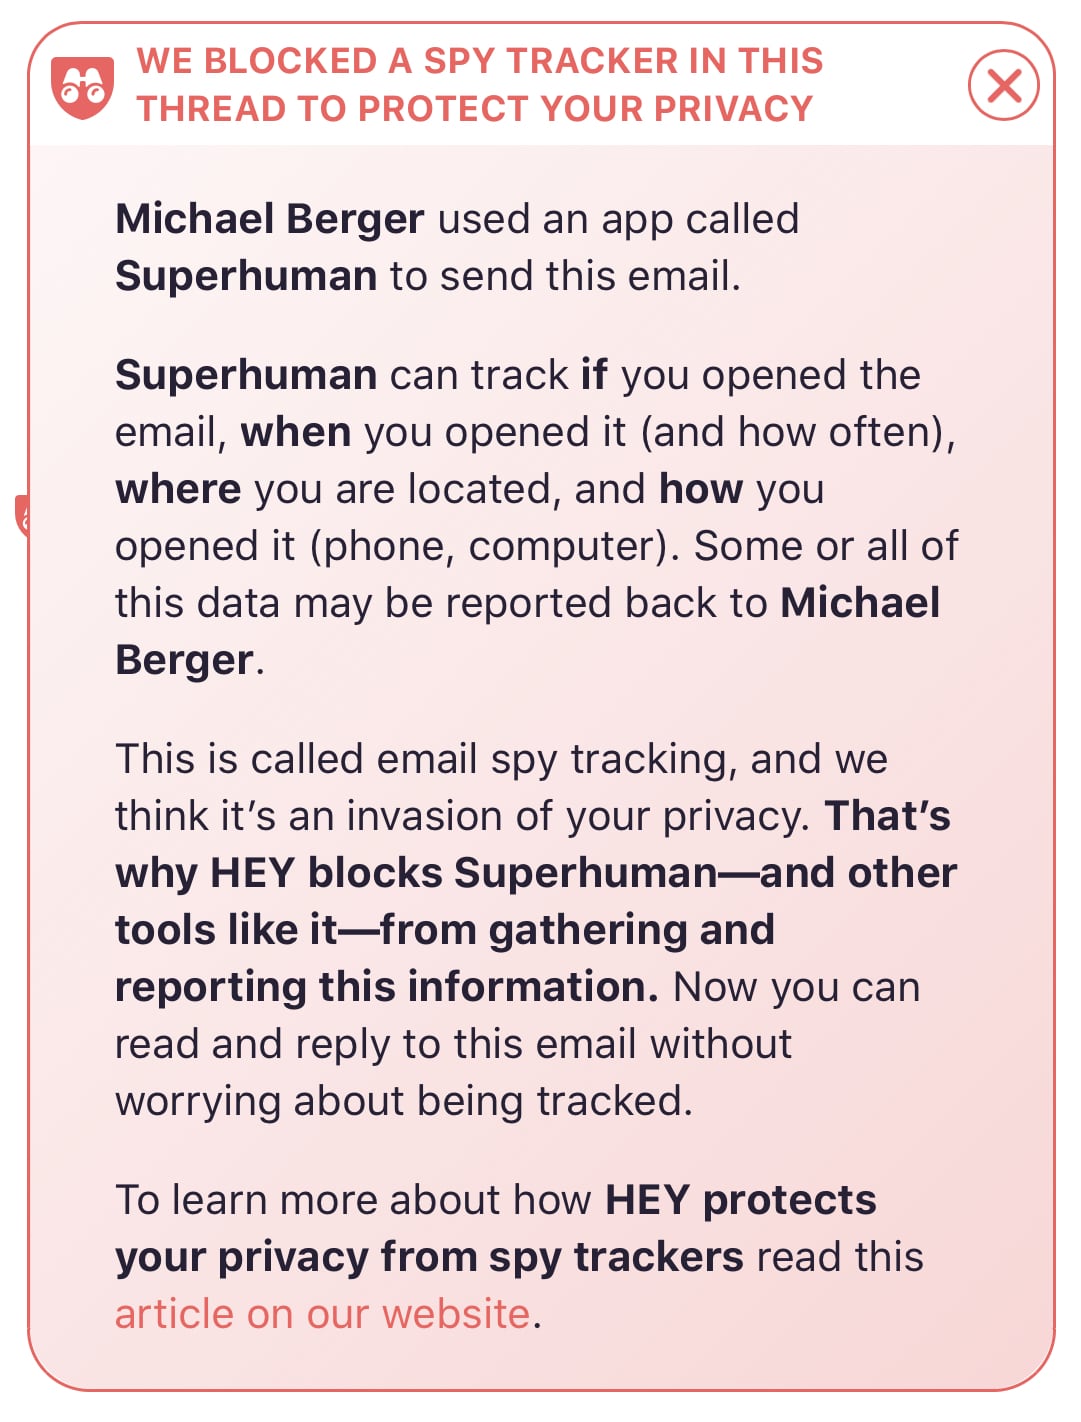 Screenshot of the anti-tracking banner